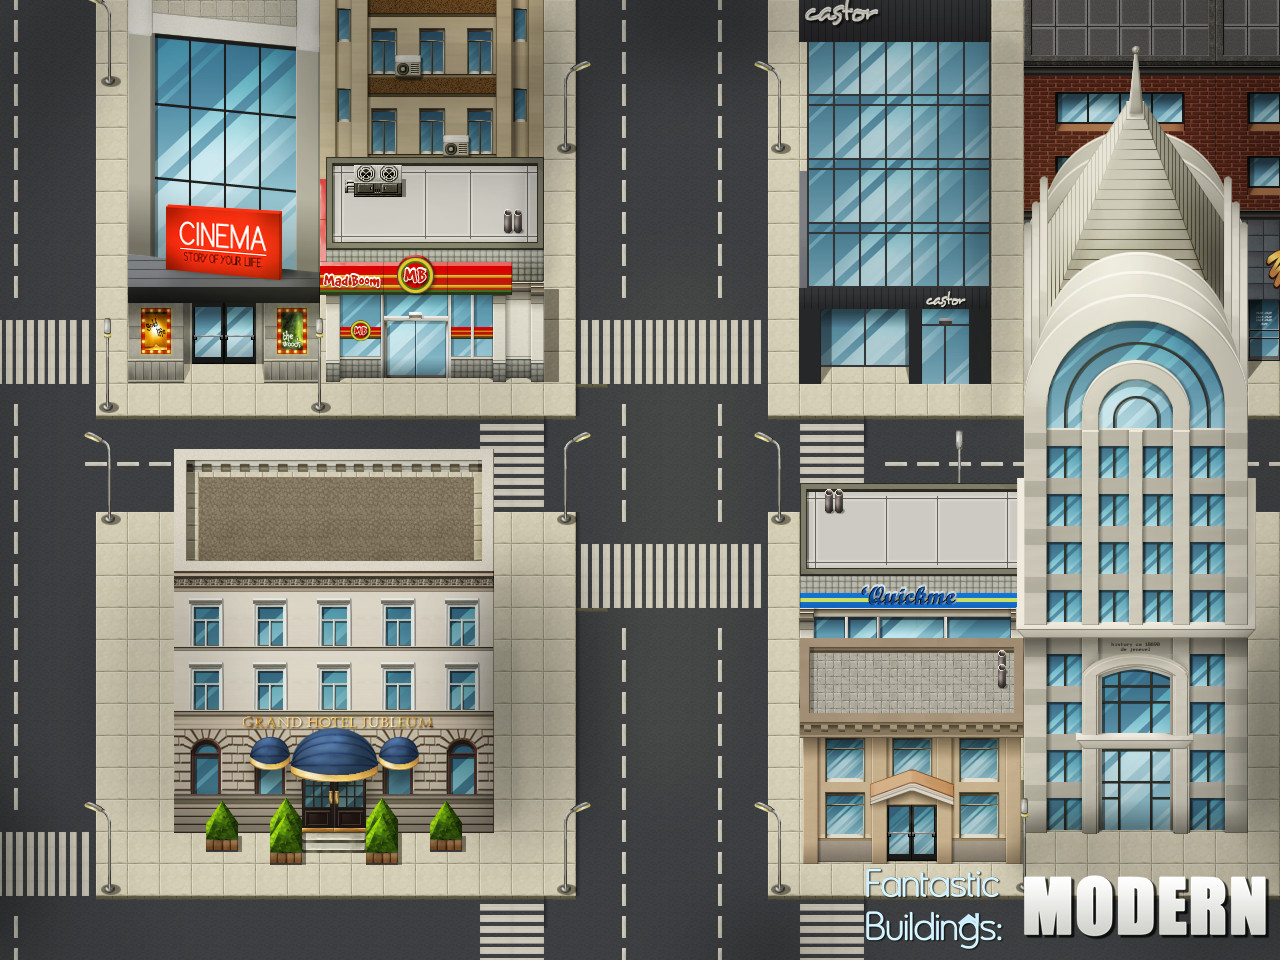 RPG Maker VX - Ace Fantastic Buildings: Modern DLC EU Steam CD Key 5.07 USD